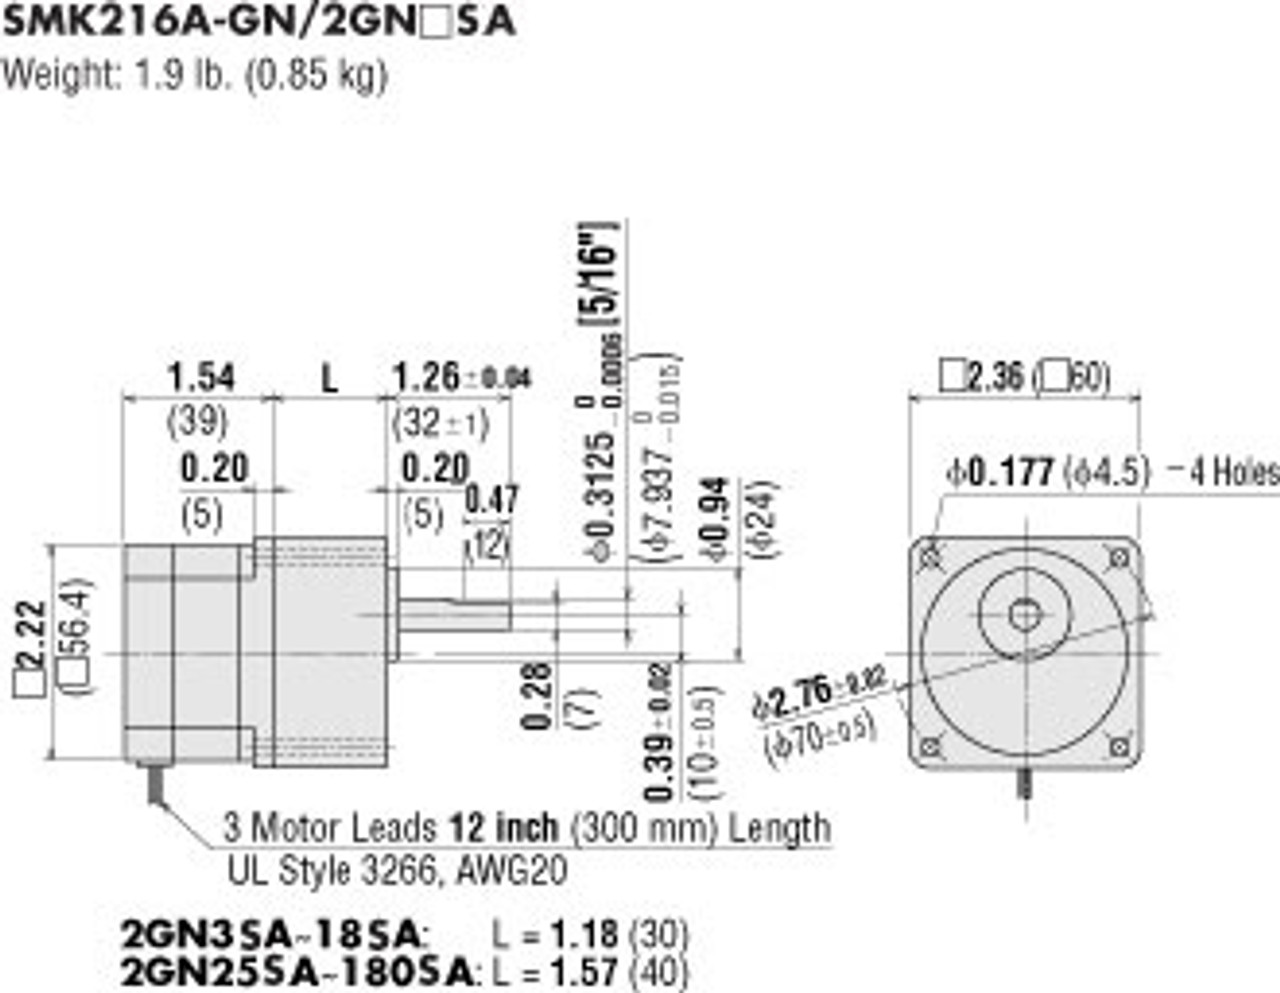 SMK216A-GN / 2GN36SA - Dimensions